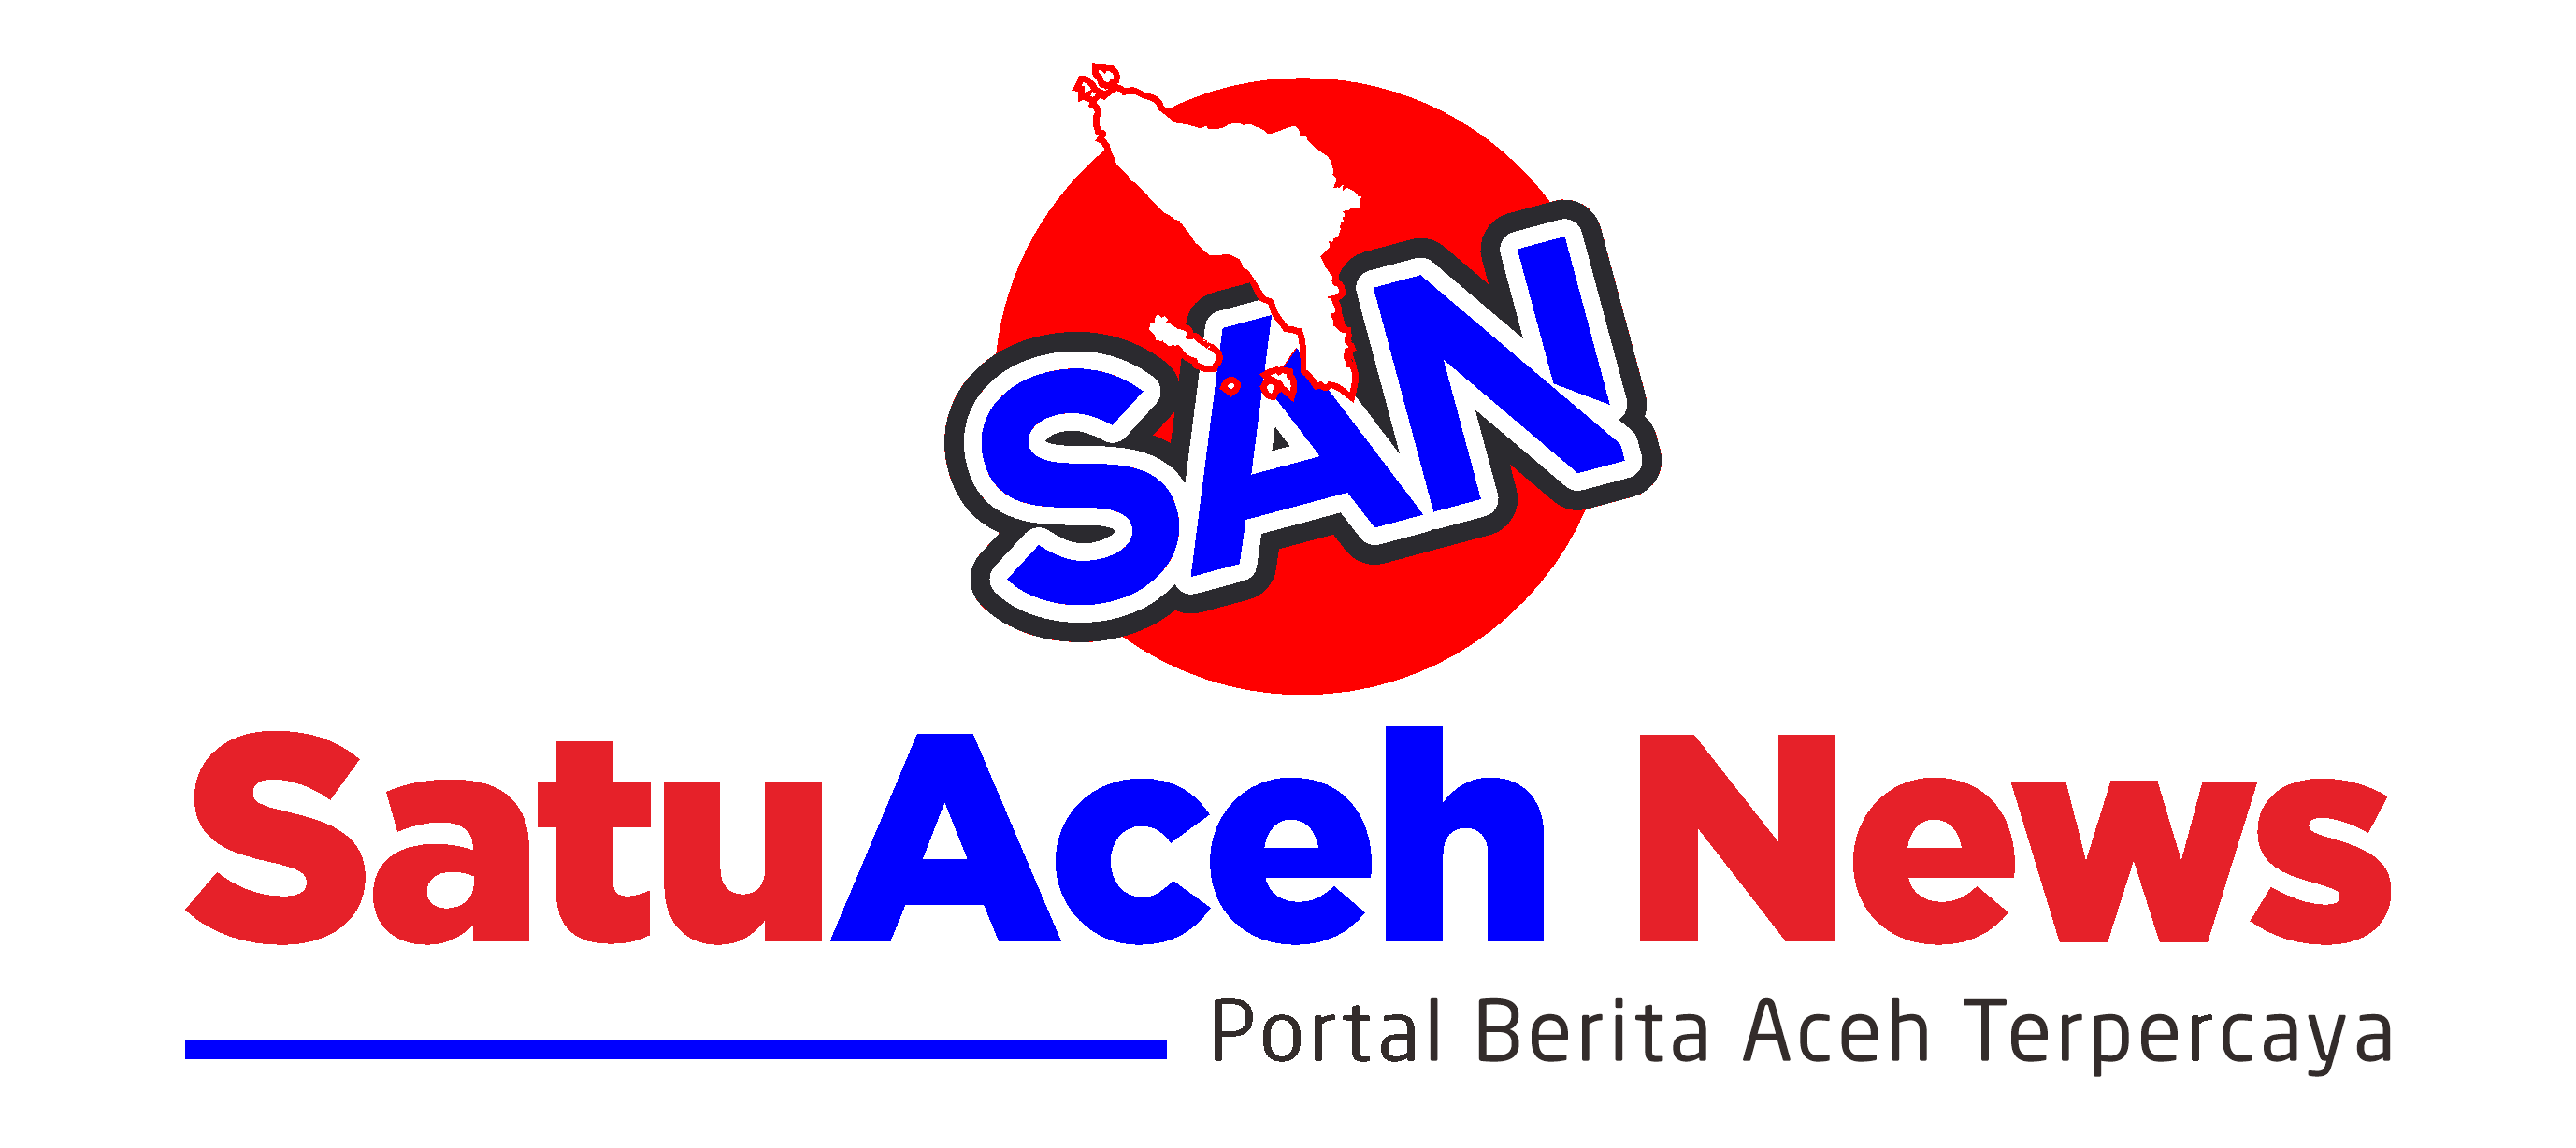 logo new satuaceh news